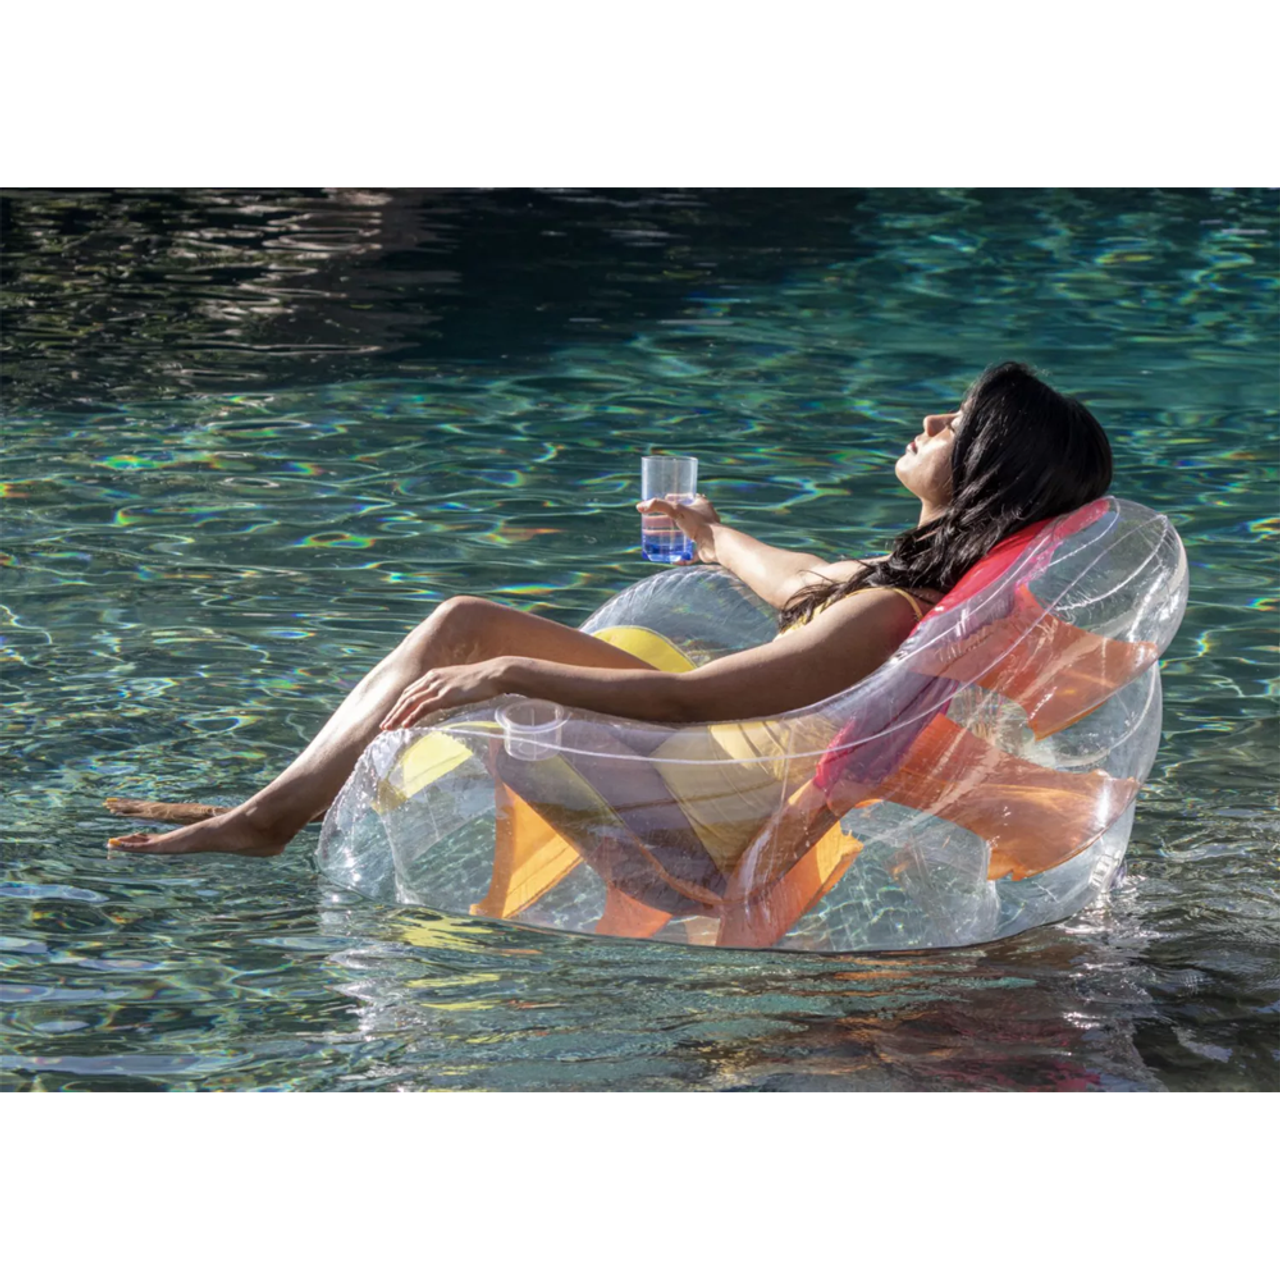 SwimWays® Dry Float Socializer™ Pool Float product image